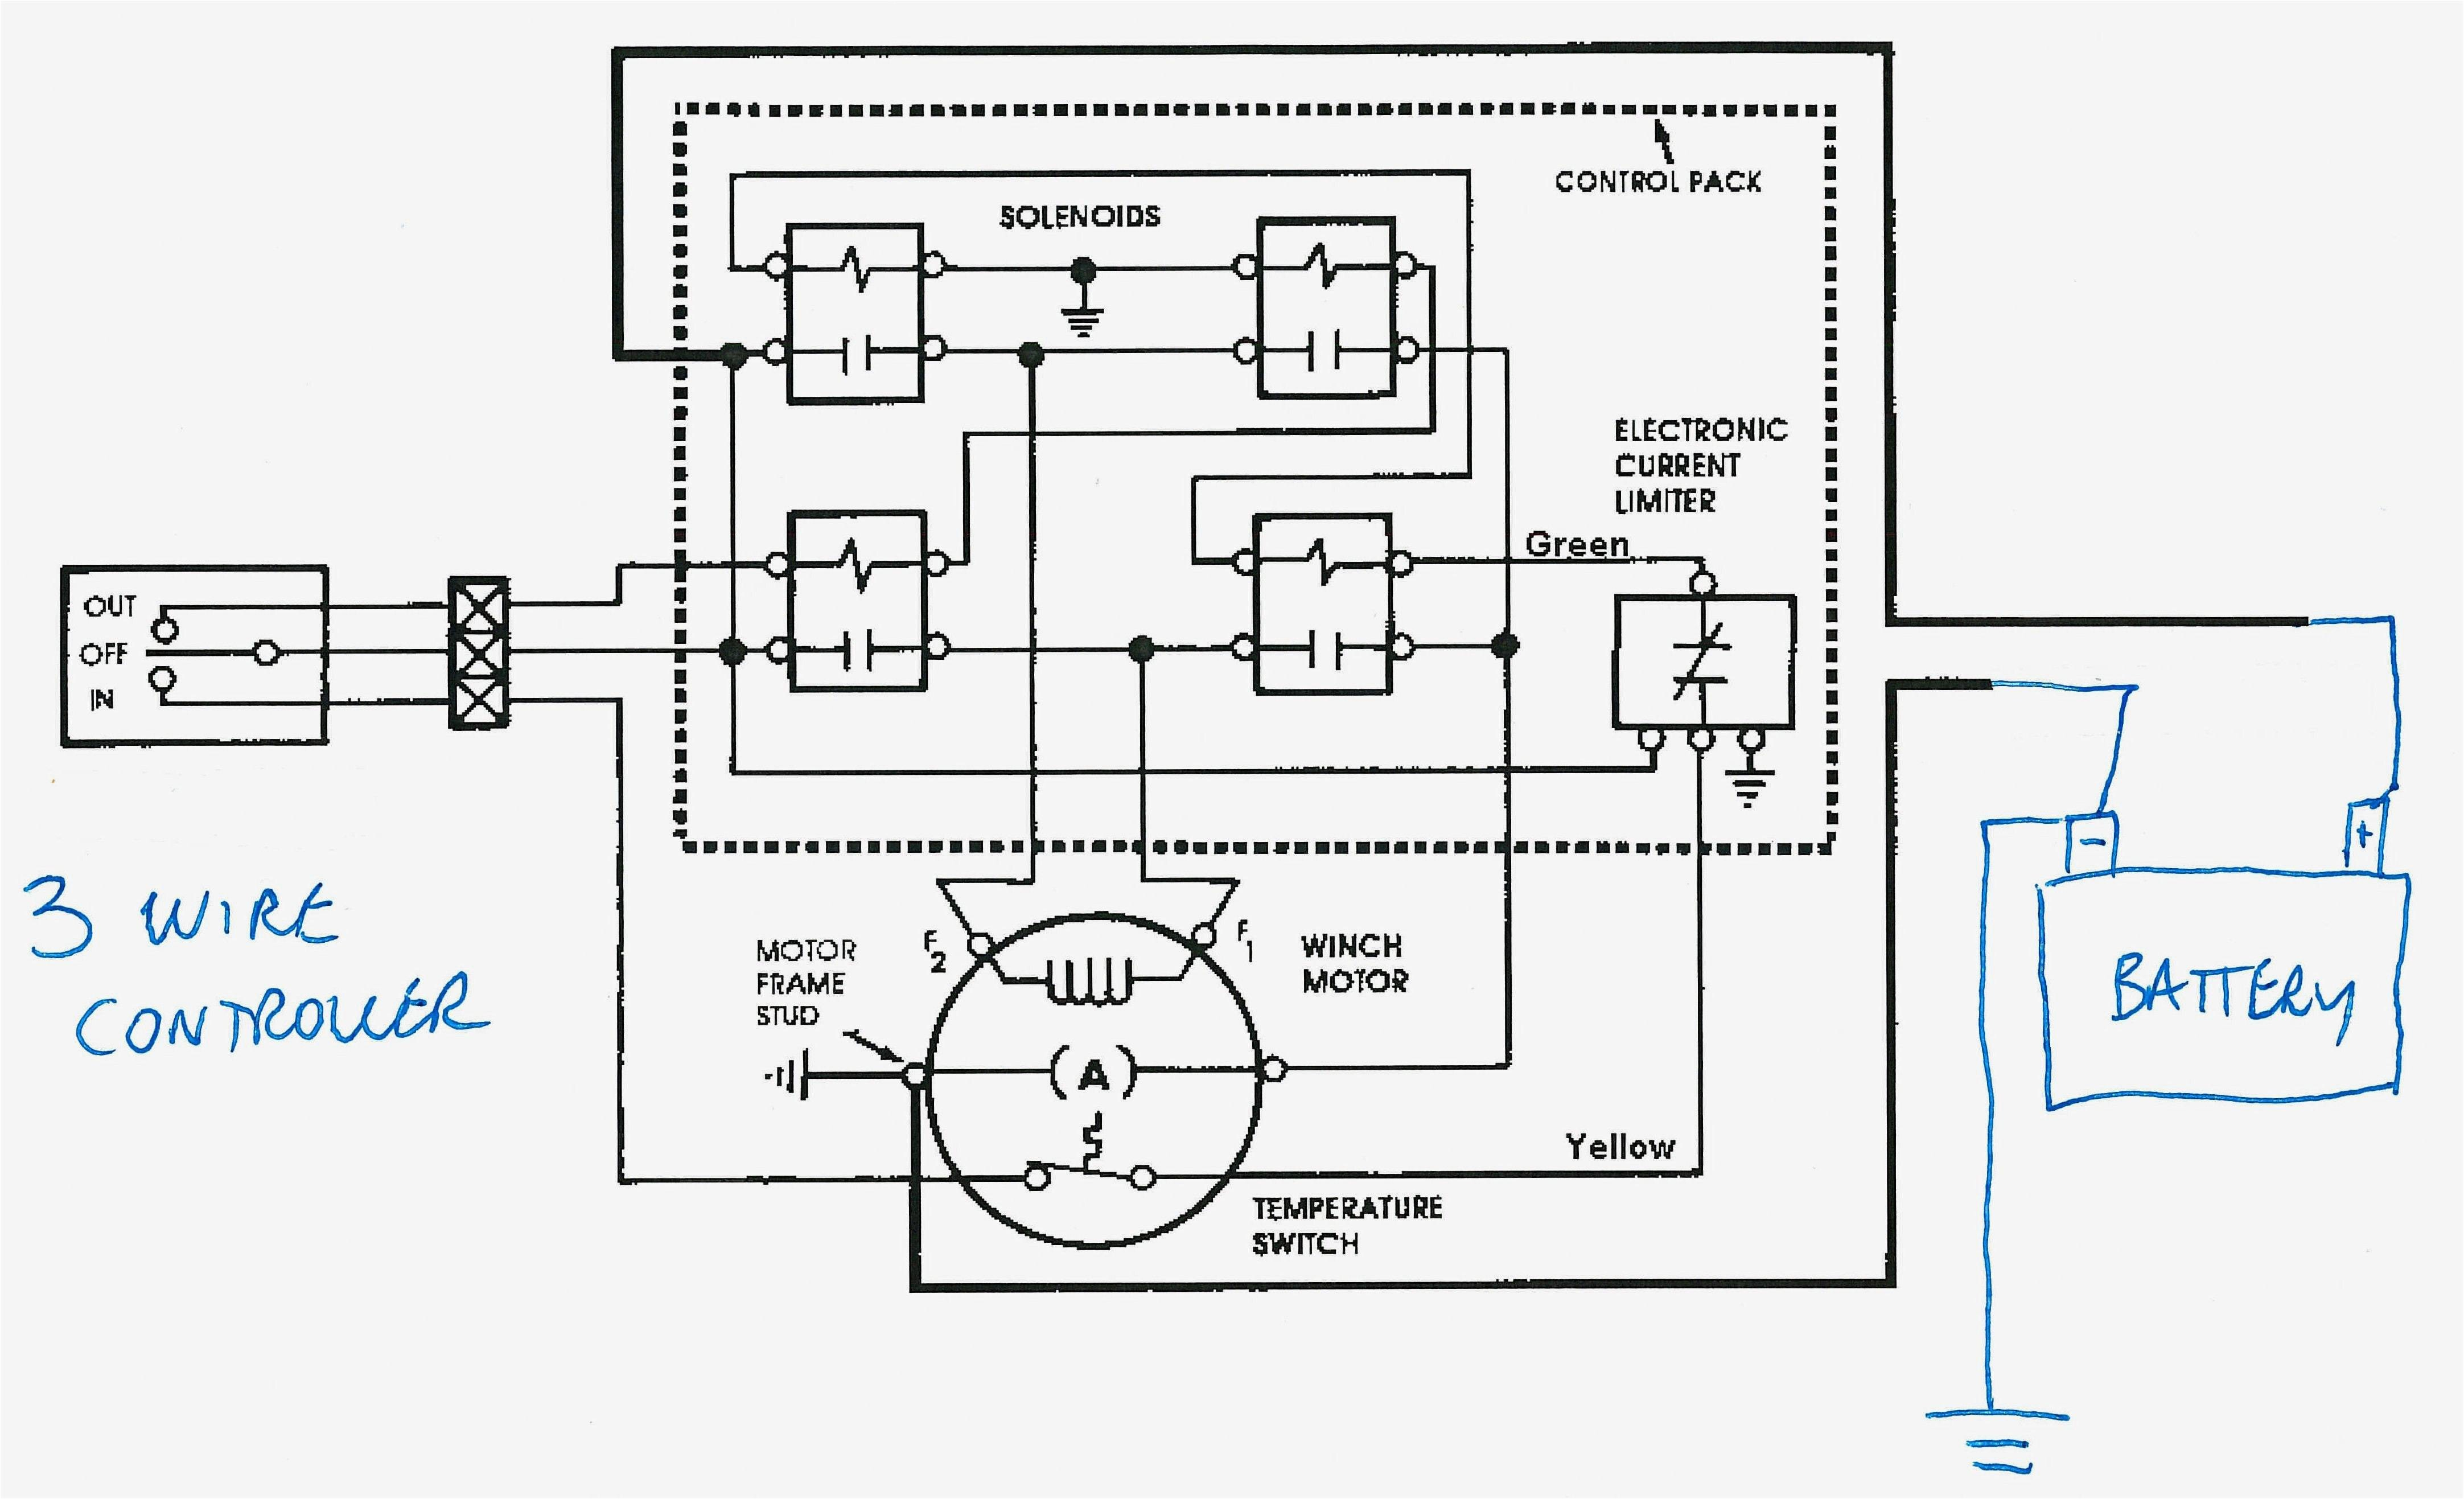 warn winch wiring diagram best of warn winch wiring diagram inside m8000 chunyan me throughout allove collection of warn winch wiring diagram jpg